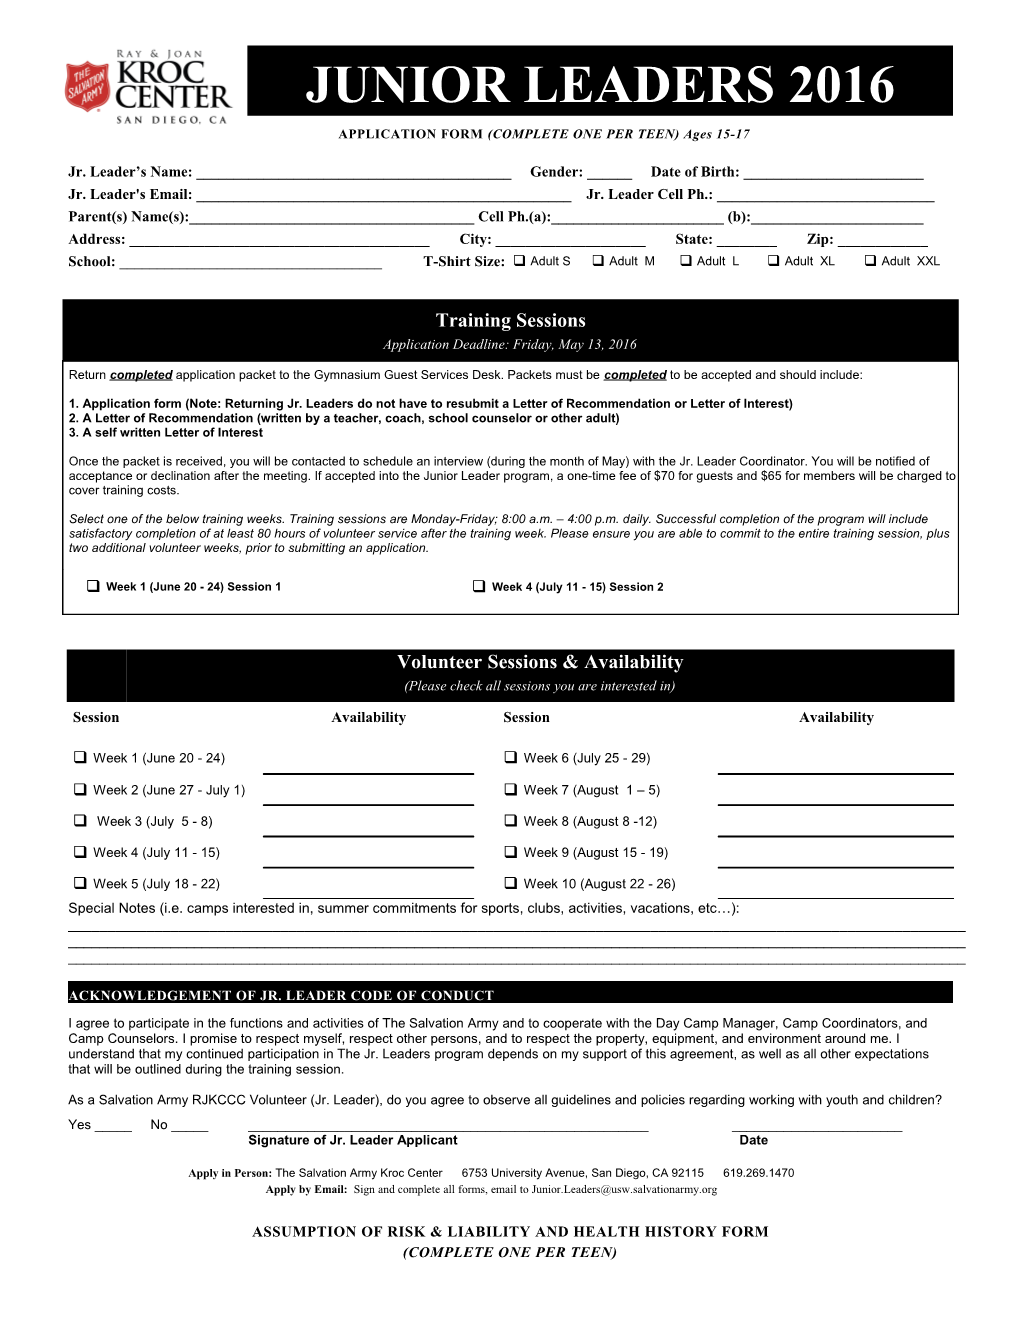 Registration Form (Complete One Per Child)